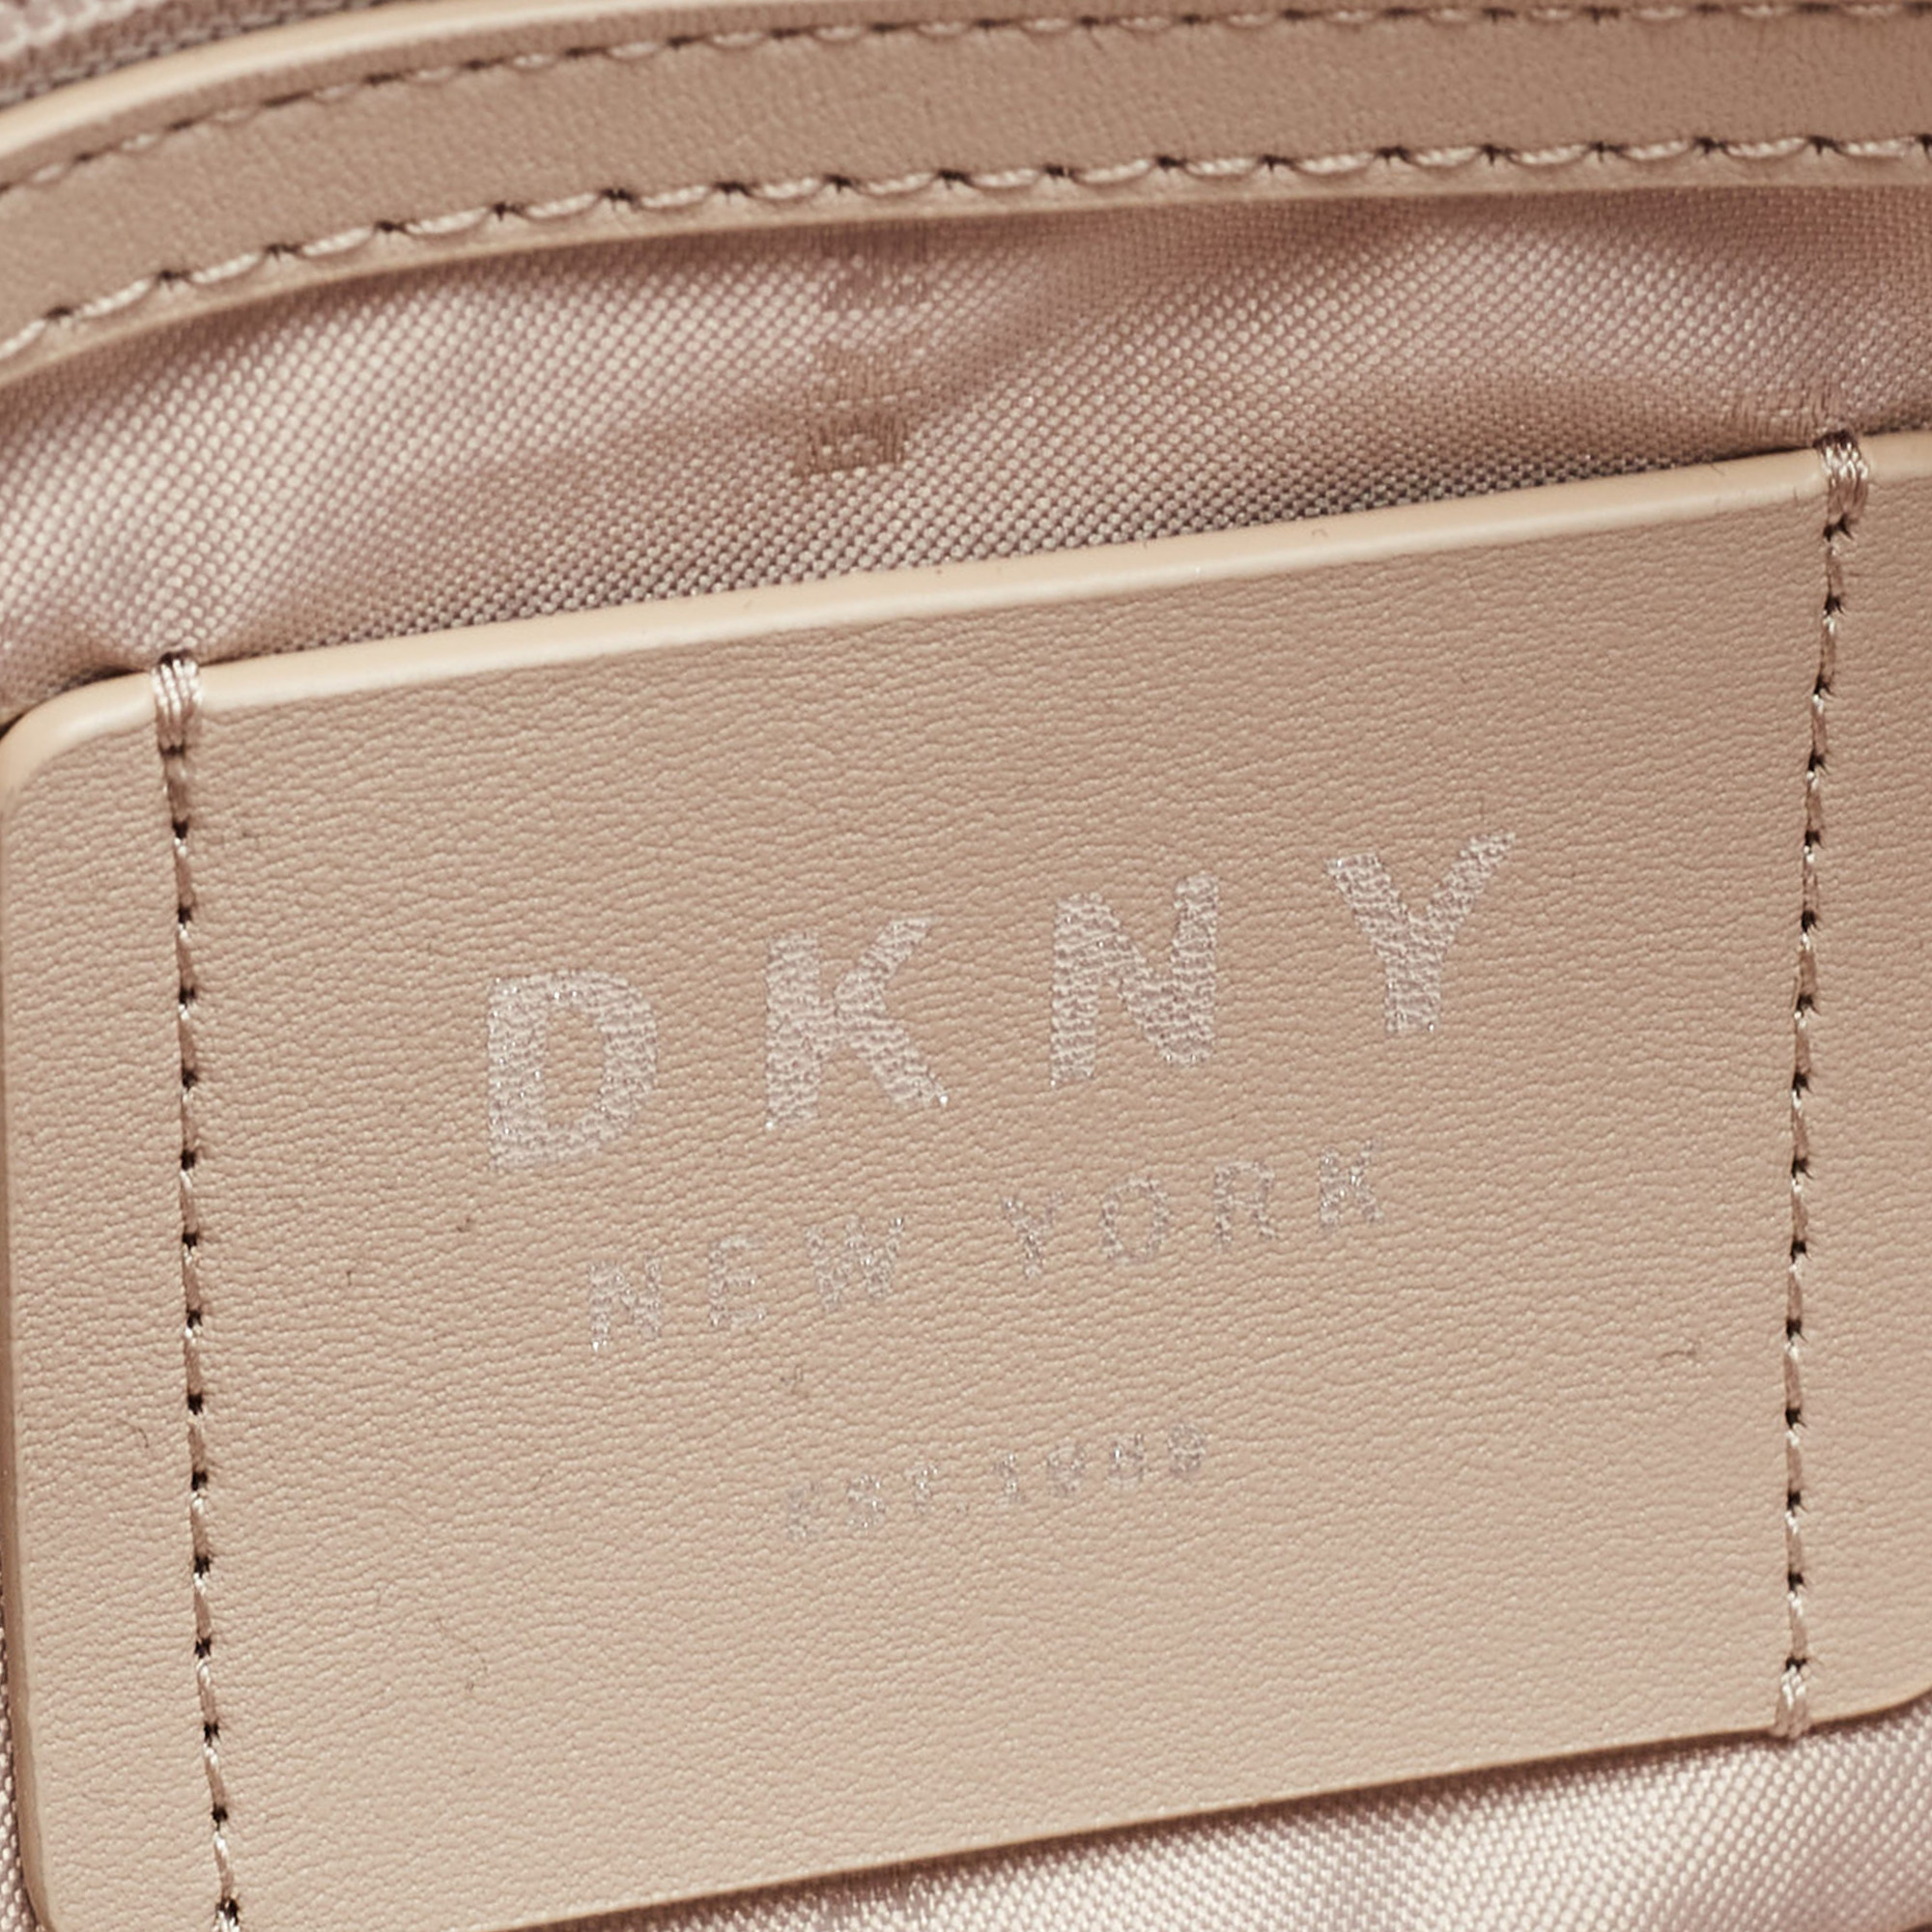 DKNY Beige Leather Bryant Dome Crossbody Bag